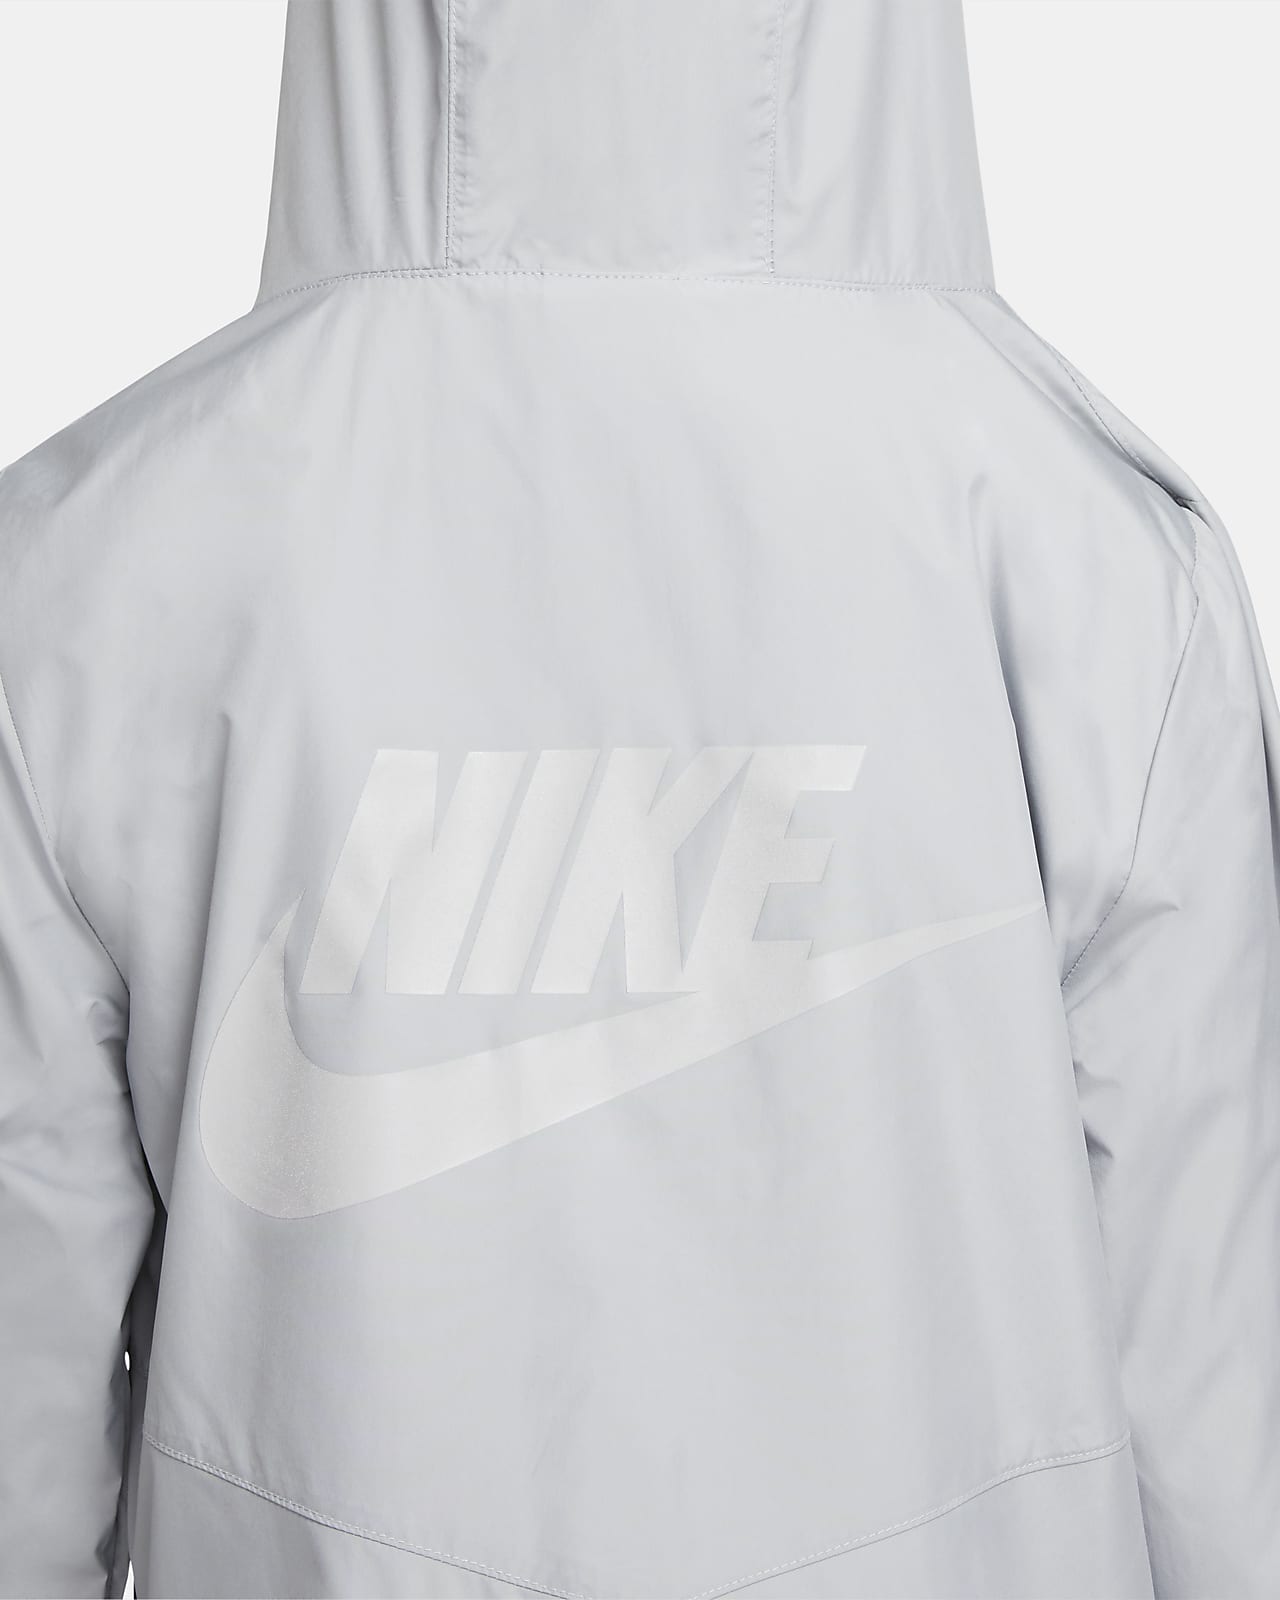 Nike Sportswear Kids Pack Utility Big Kids' (Boys') Jacket.